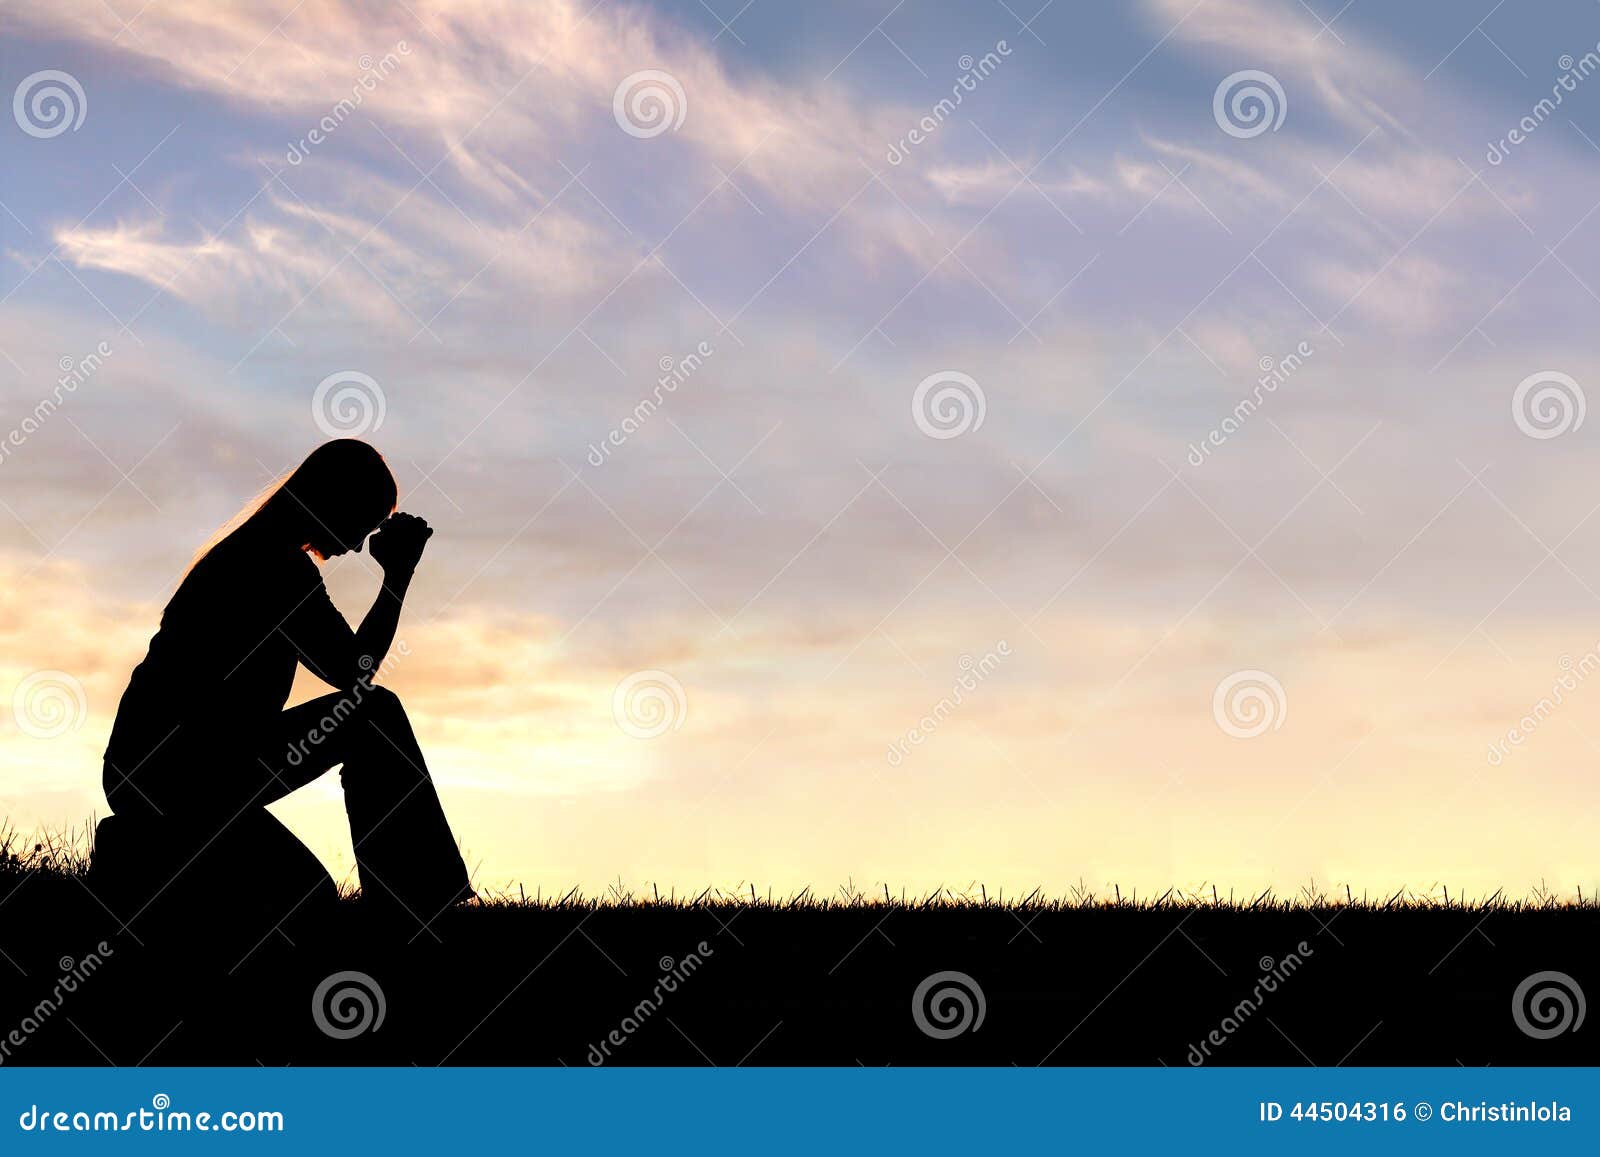 woman sitting down in prayer silhouette